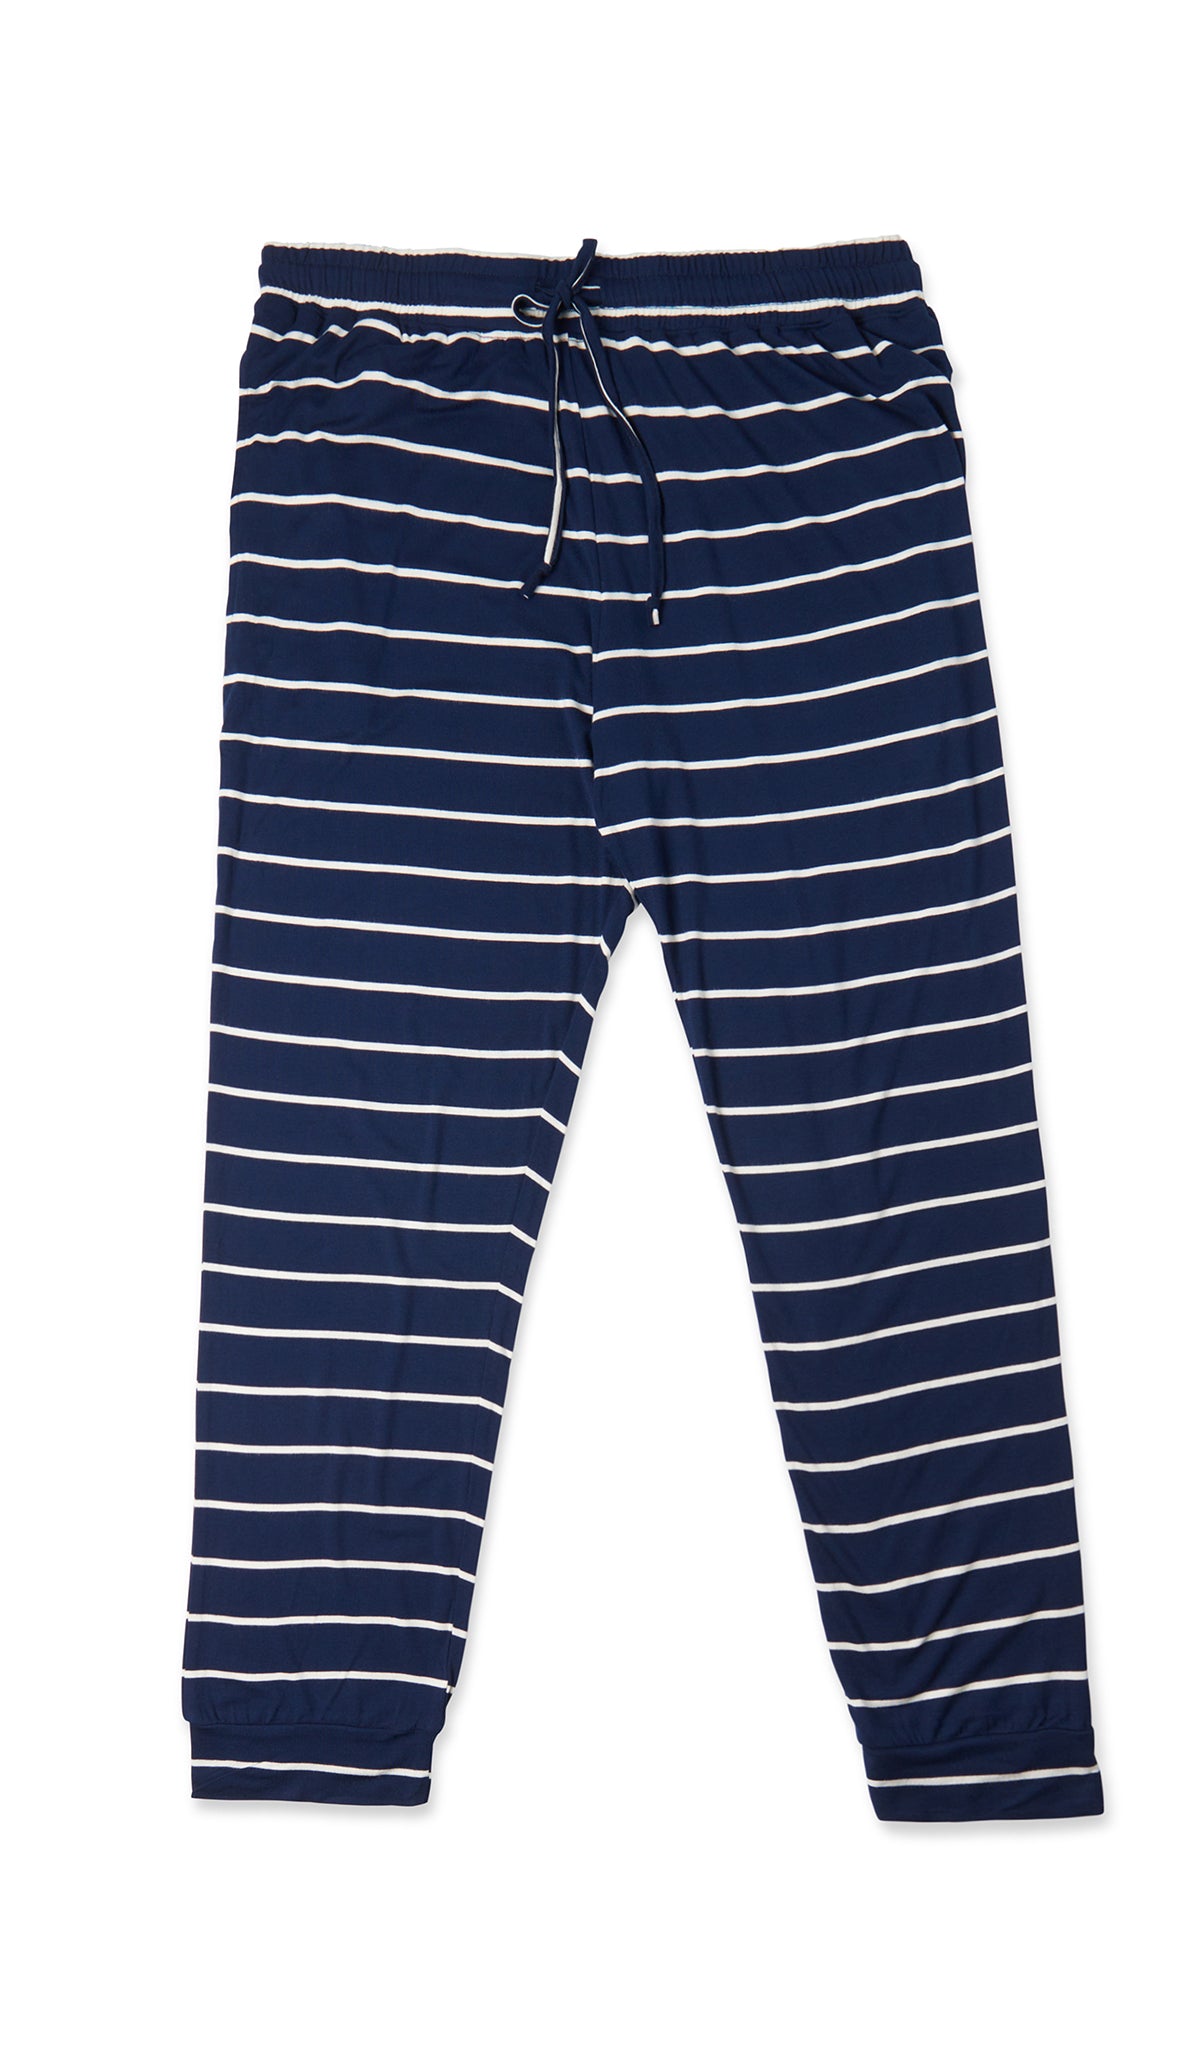 Navy Stripe Oliver Mens pants with elastic drawstring waist and cuff hem.